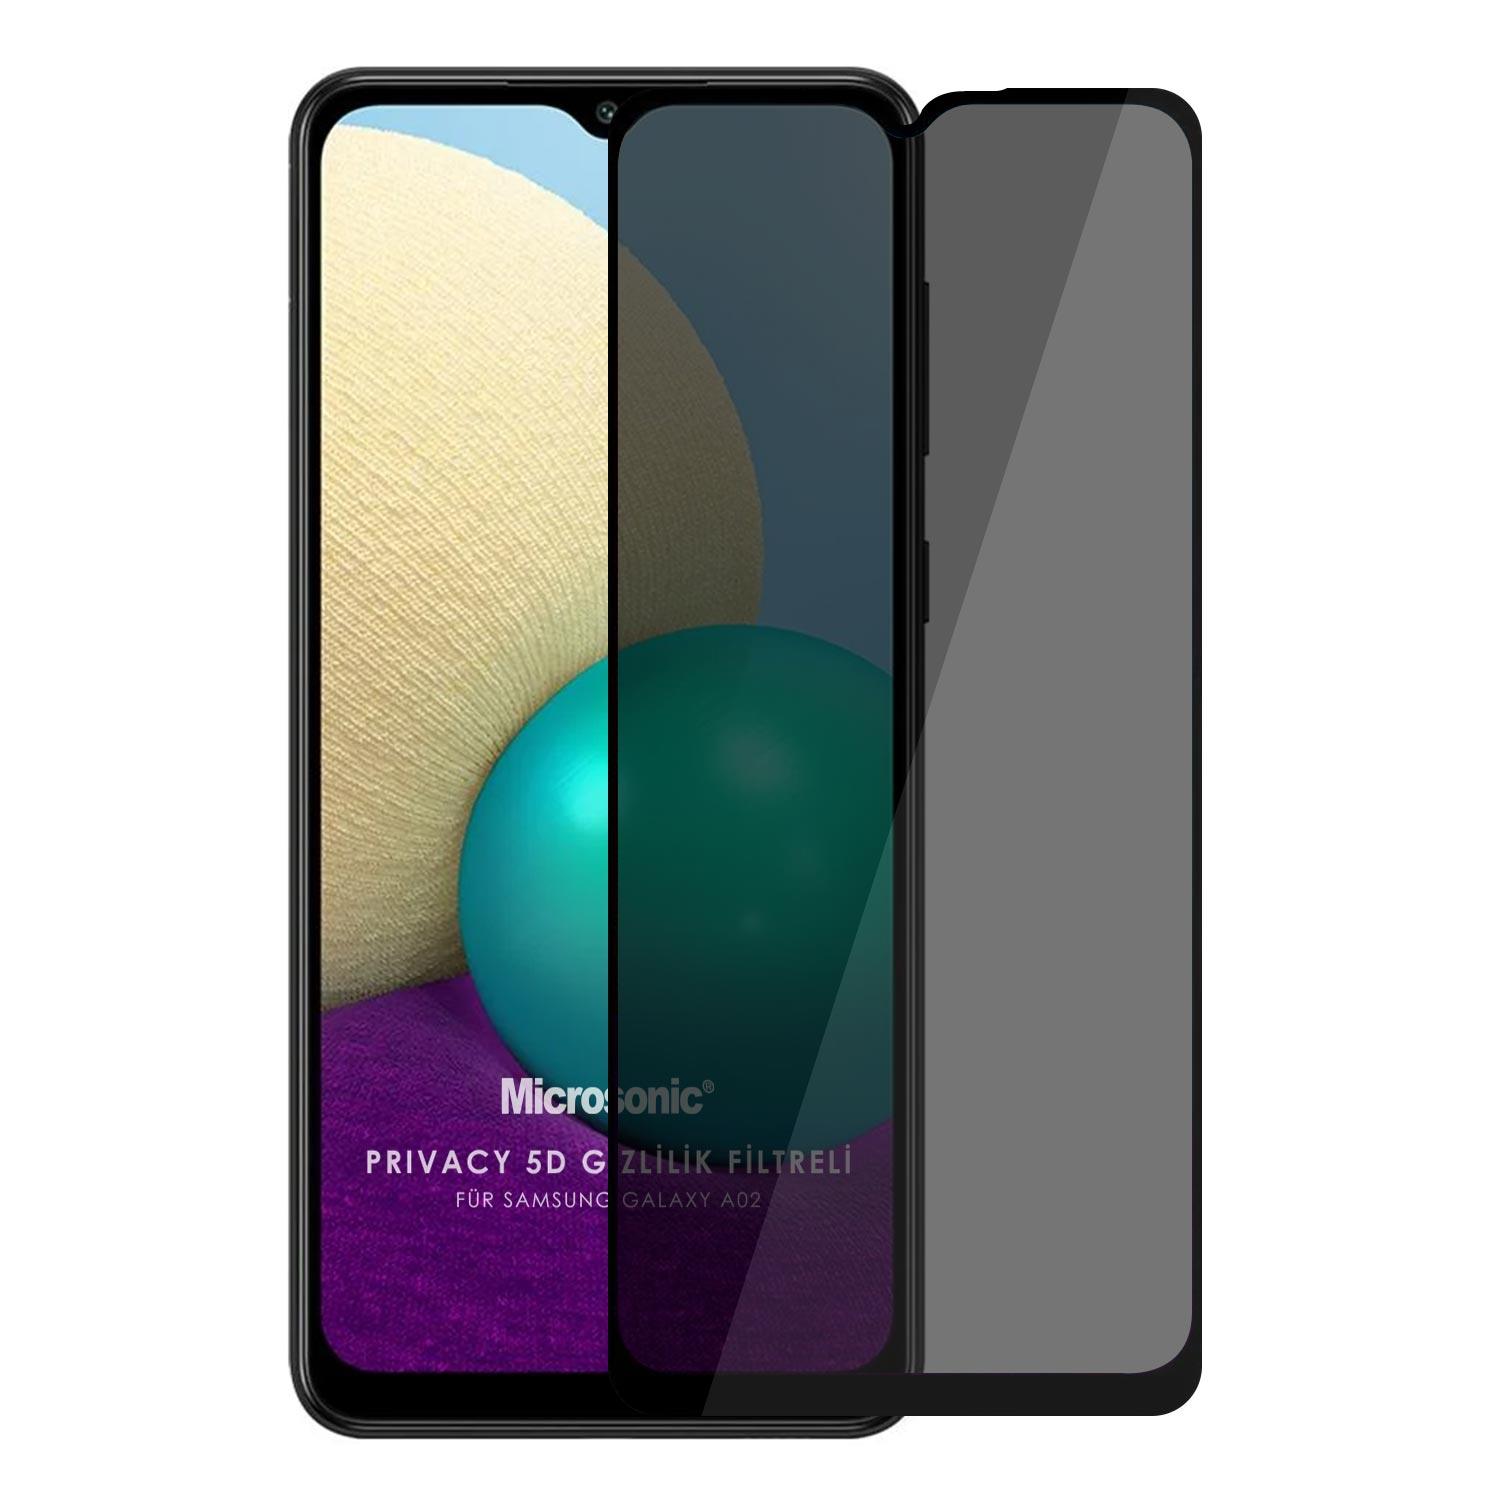 Microsonic Samsung Galaxy A02 Privacy 5D Gizlilik Filtreli Cam Ekran Koruyucu Siyah